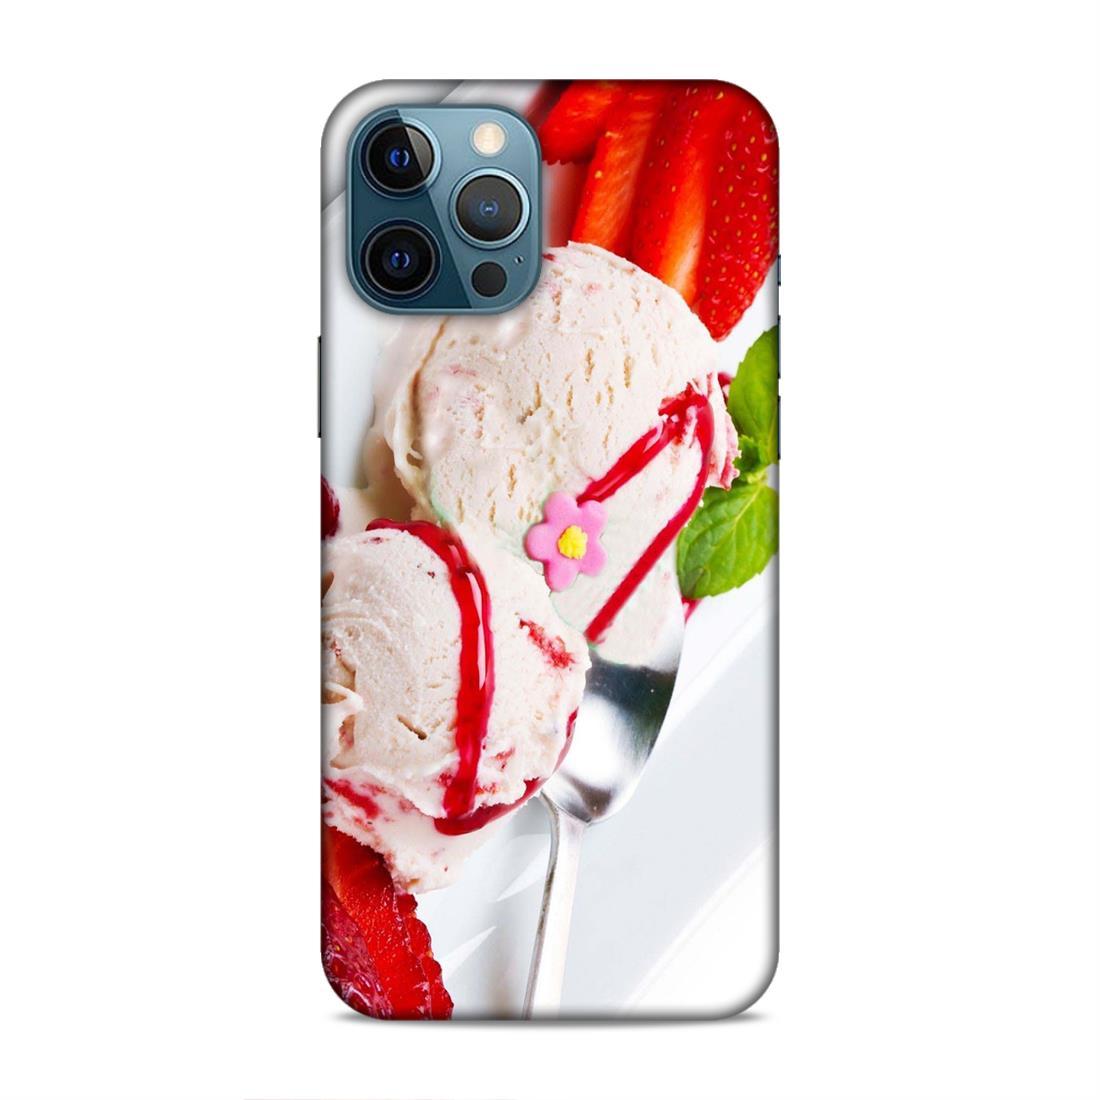 Icecream Love iPhone 12 Pro Max Mobile Cover